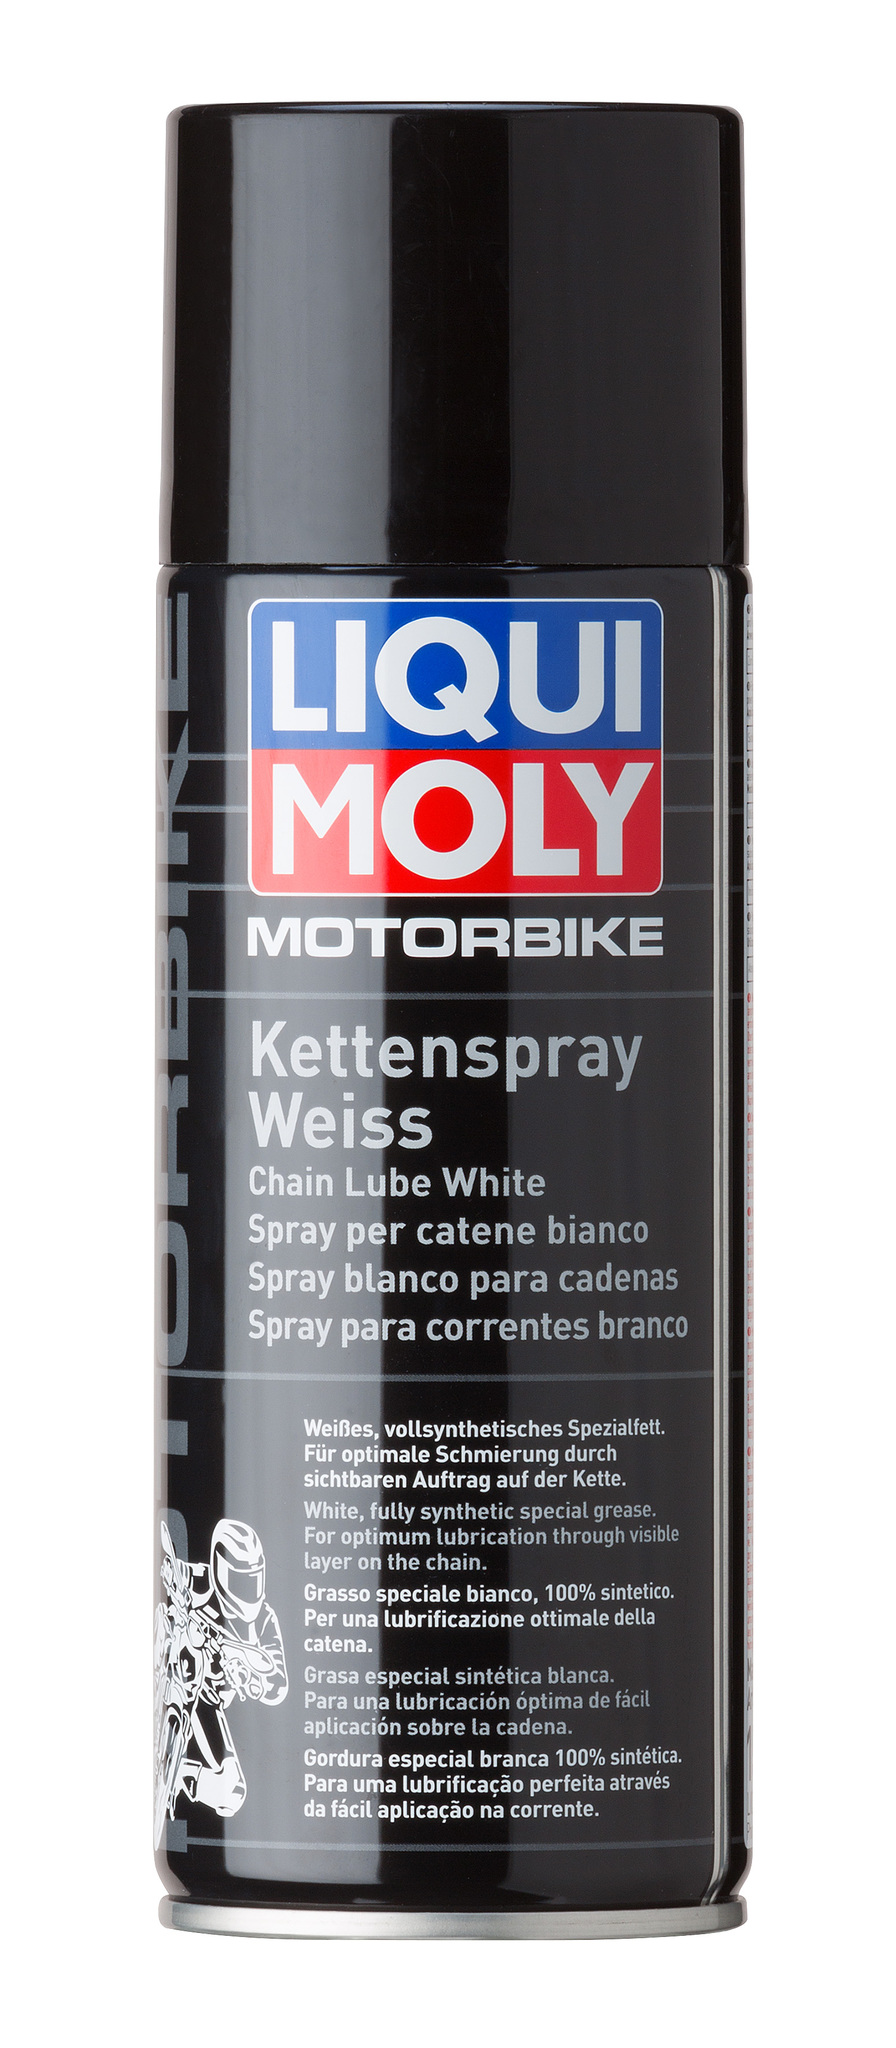 Liqui Moly Motorbike Kettenspray Weiss Белая цепная смазка для мотоциклов